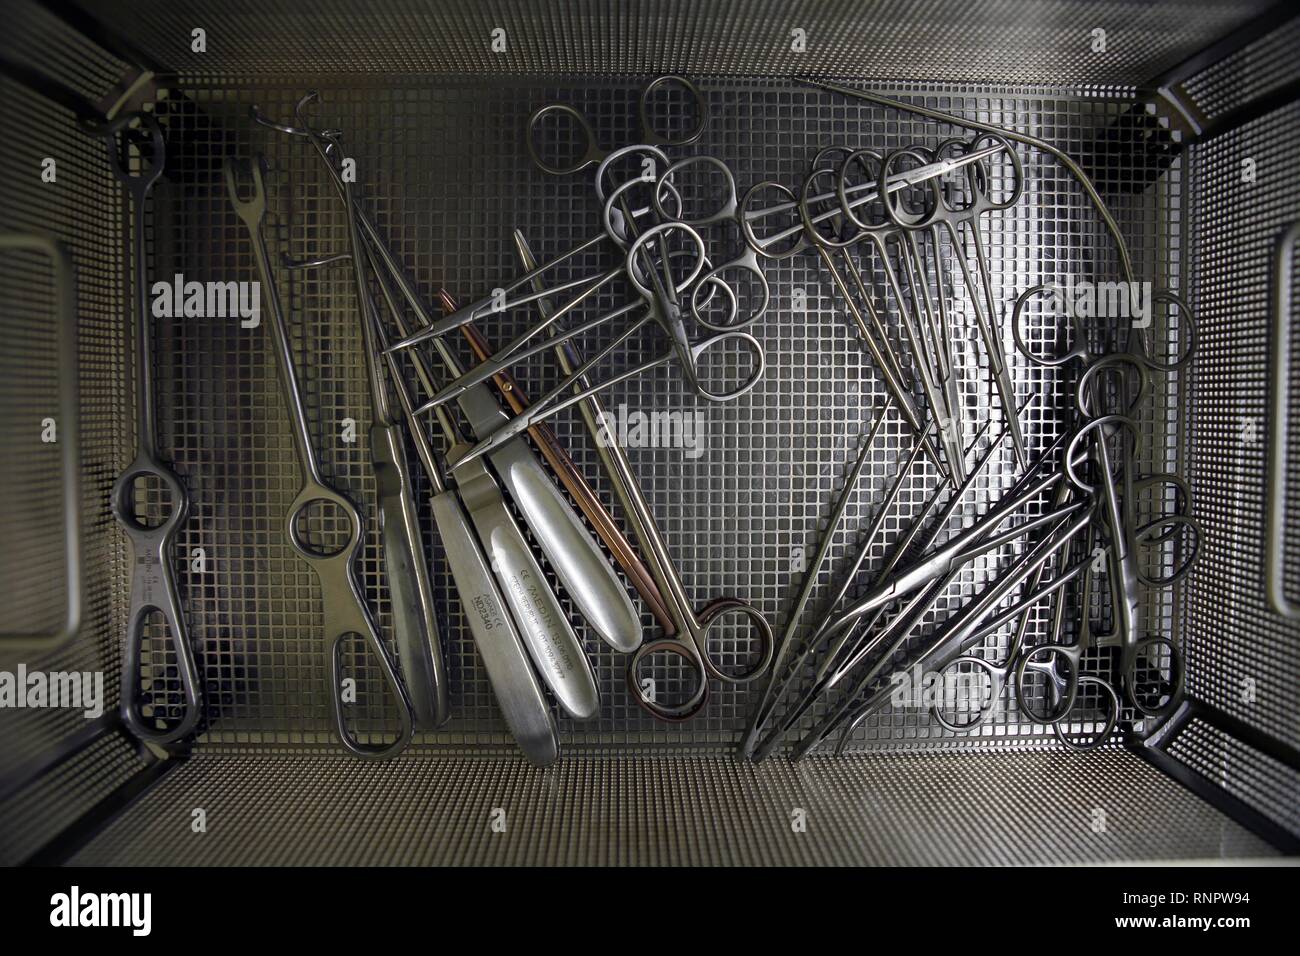 Surgical instruments, Czech Republic Stock Photo